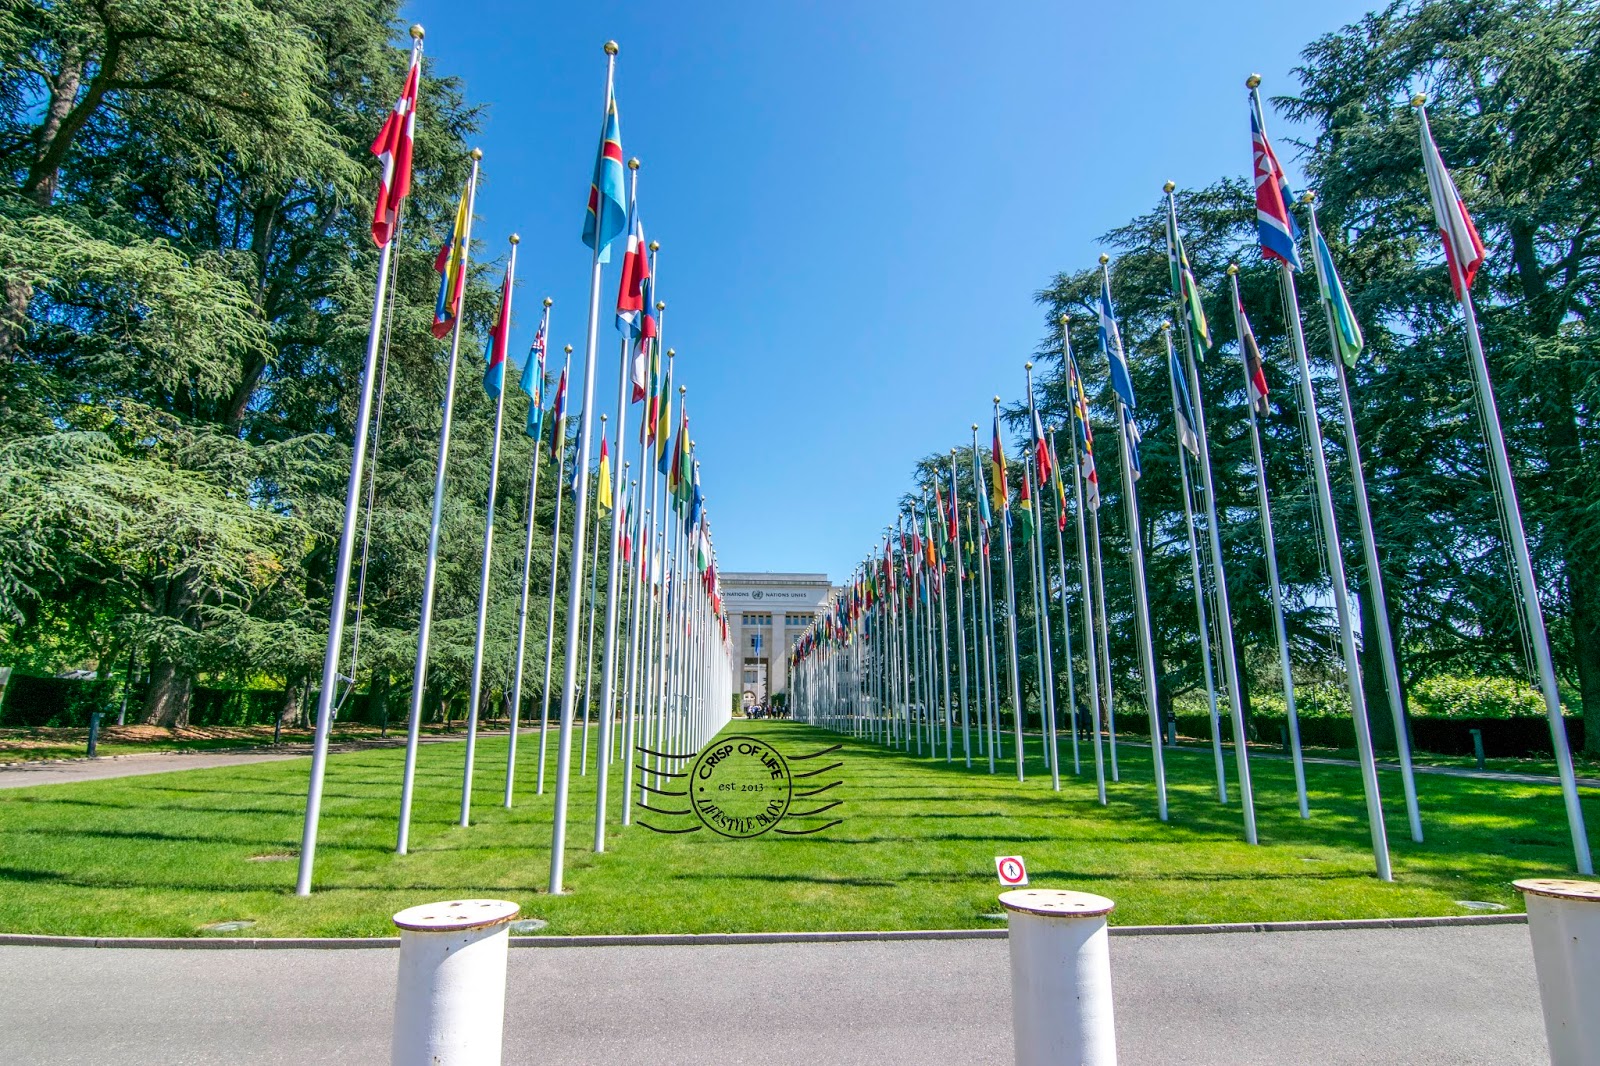 12 Things to Do in Geneva